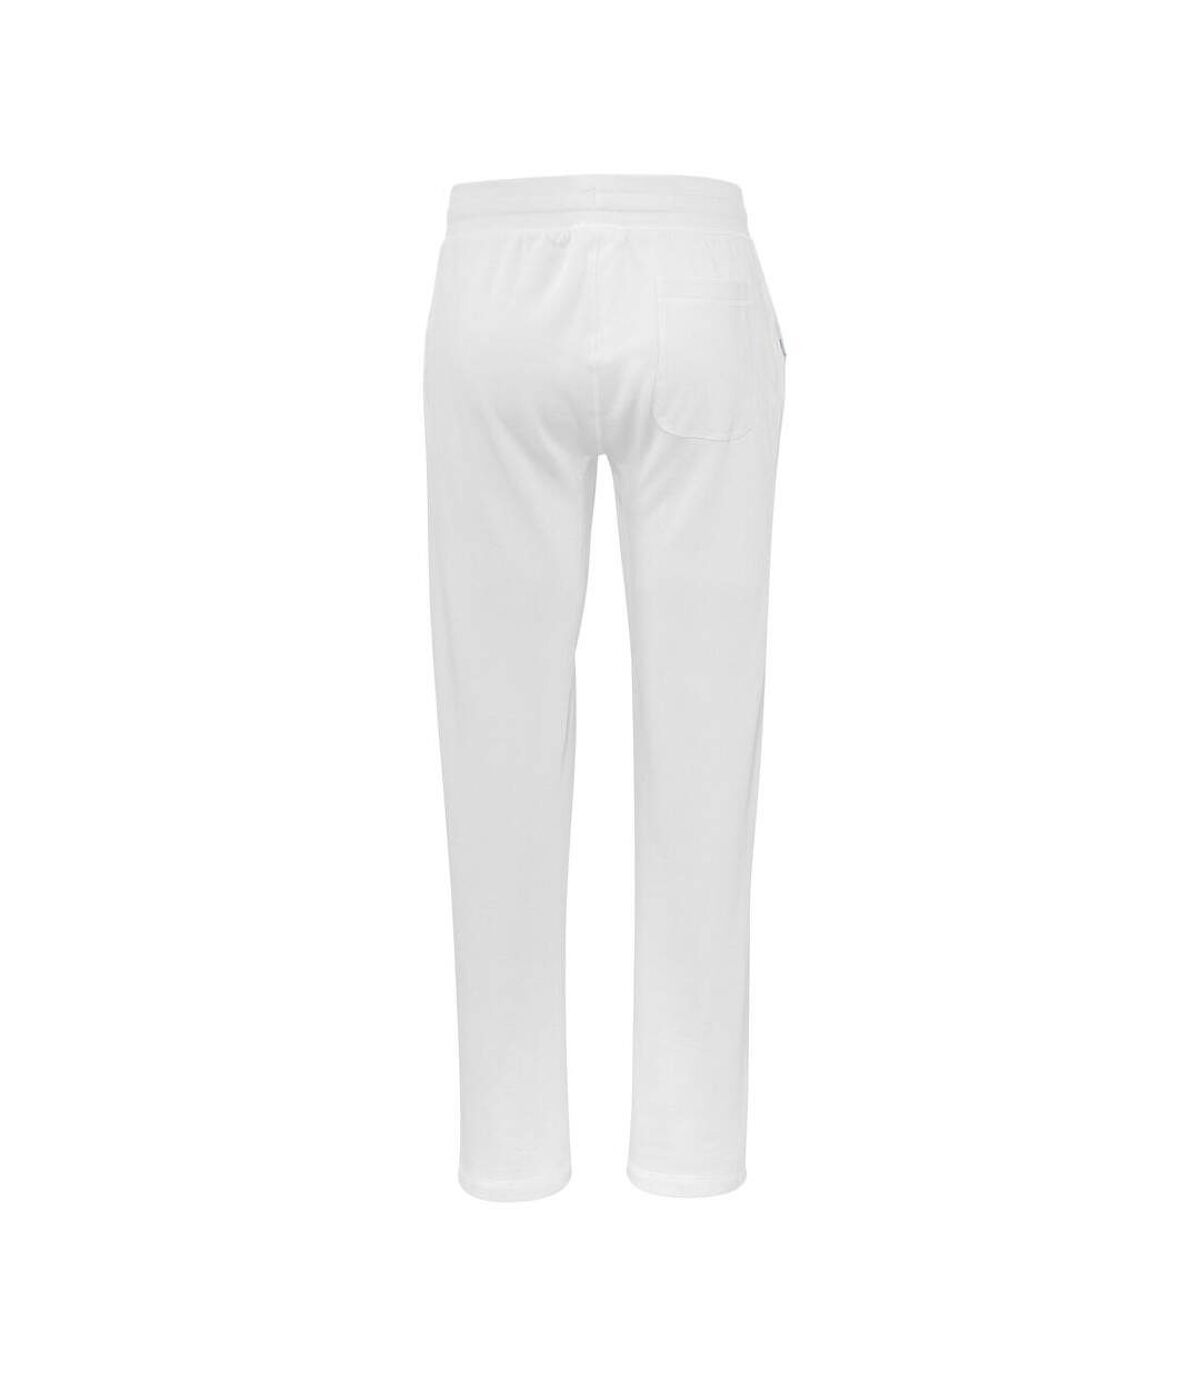 Cottover Mens Sweatpants (White)